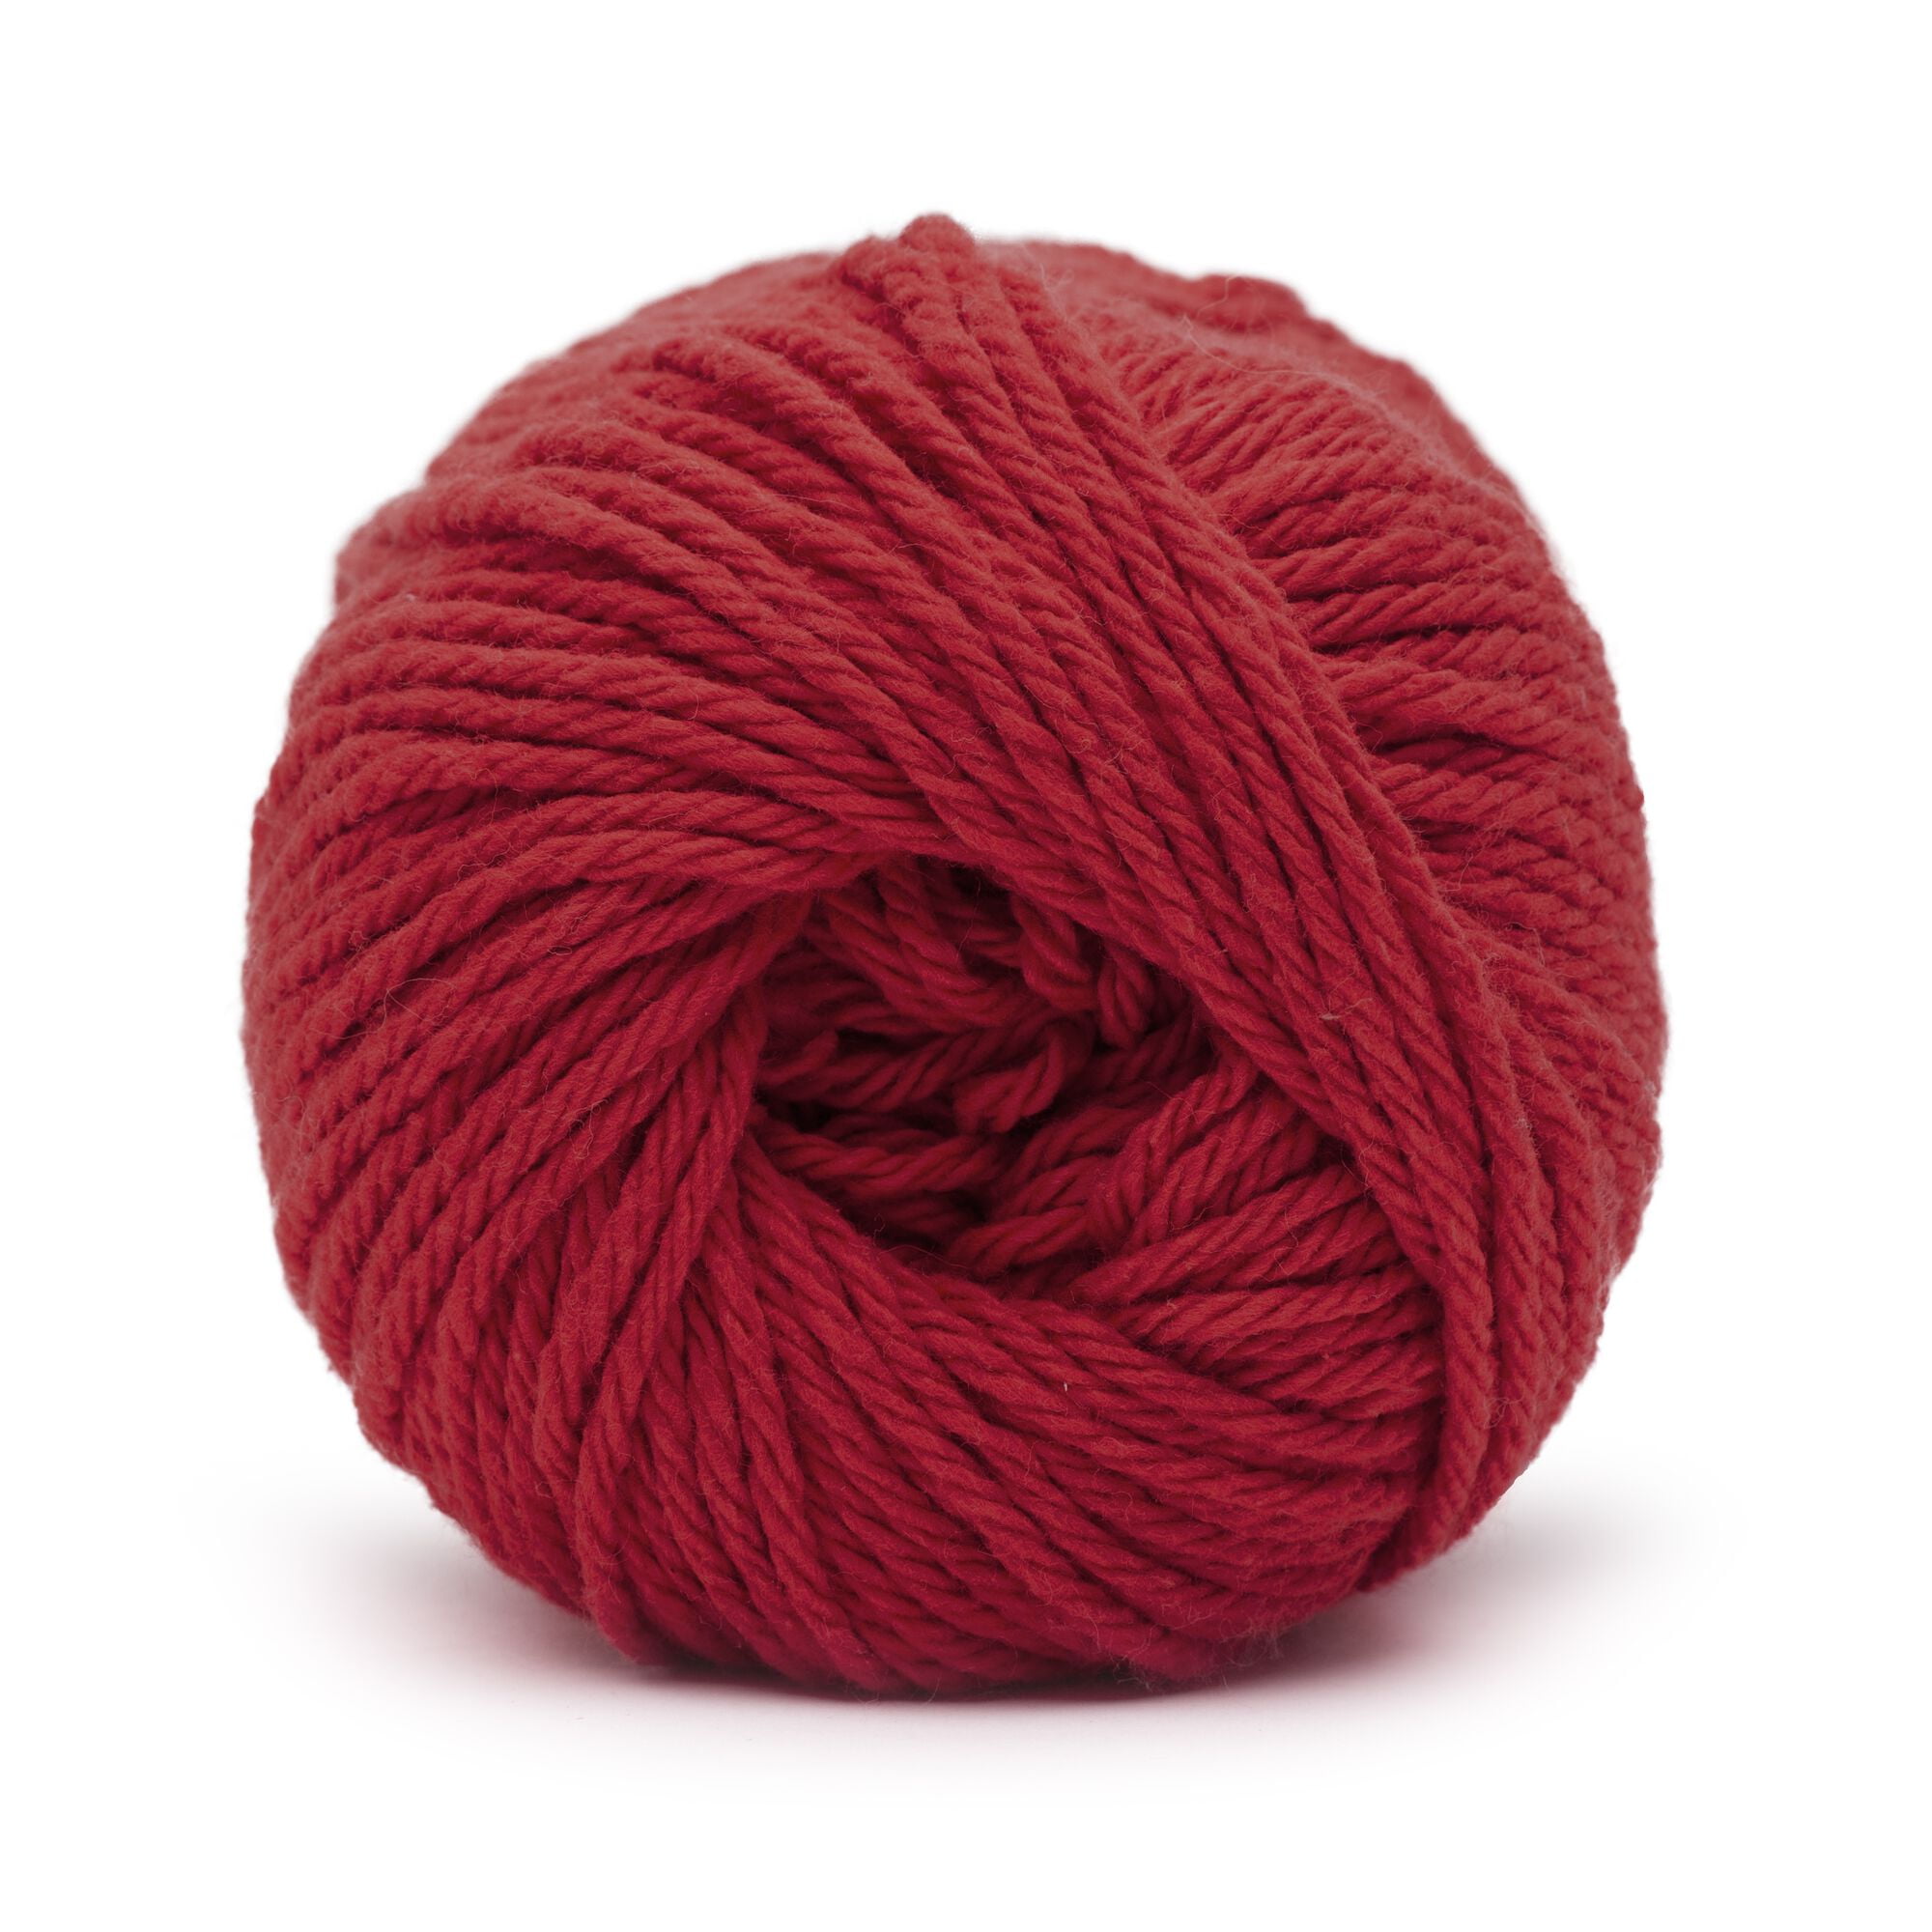 Mercerized Cotton Yarn, red, 20 g/ 1 ball